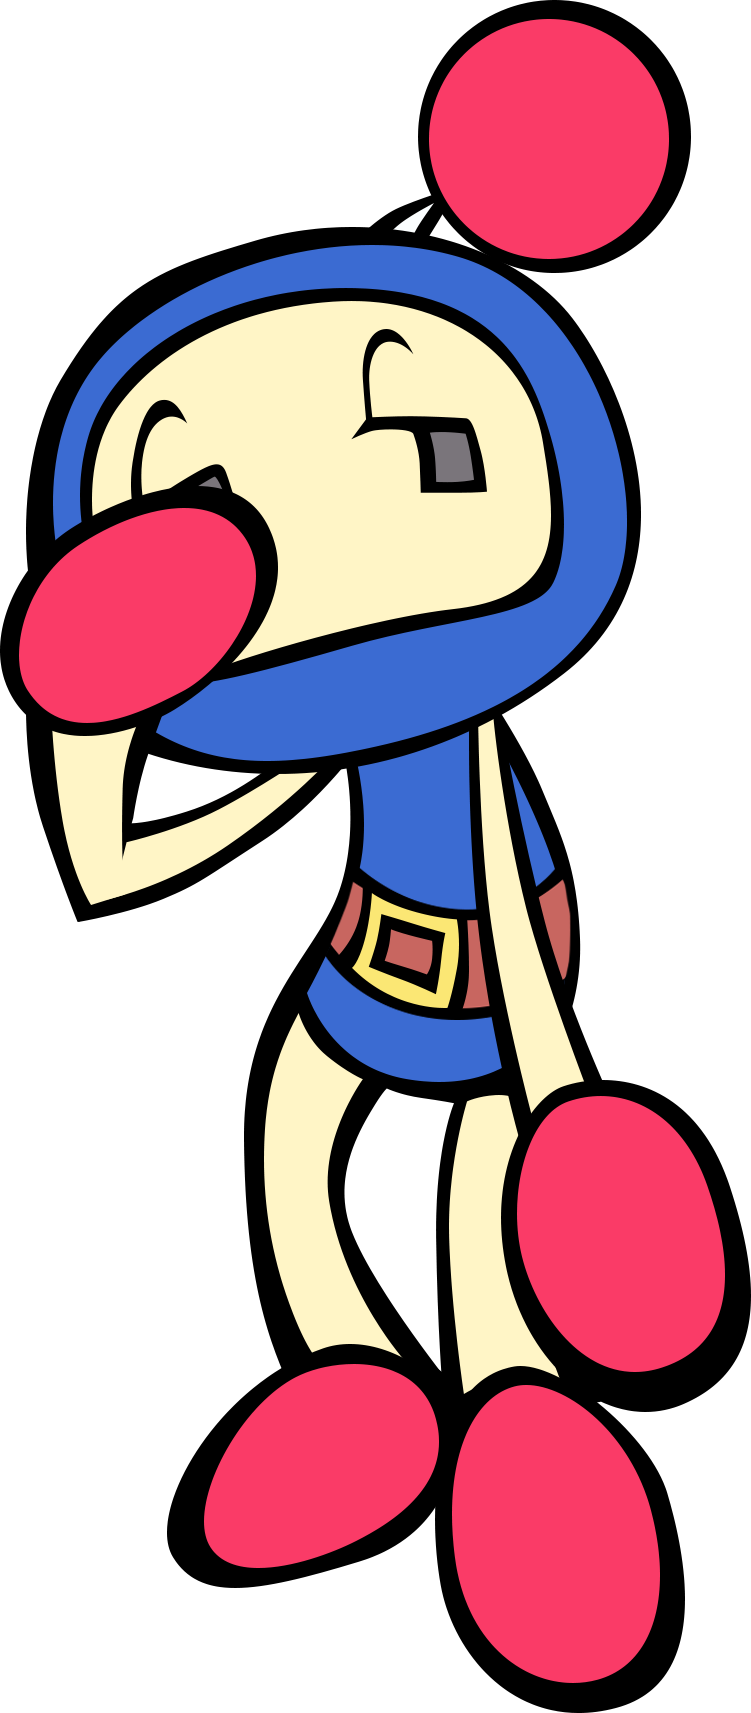 Super Bomberman R - Wikipedia